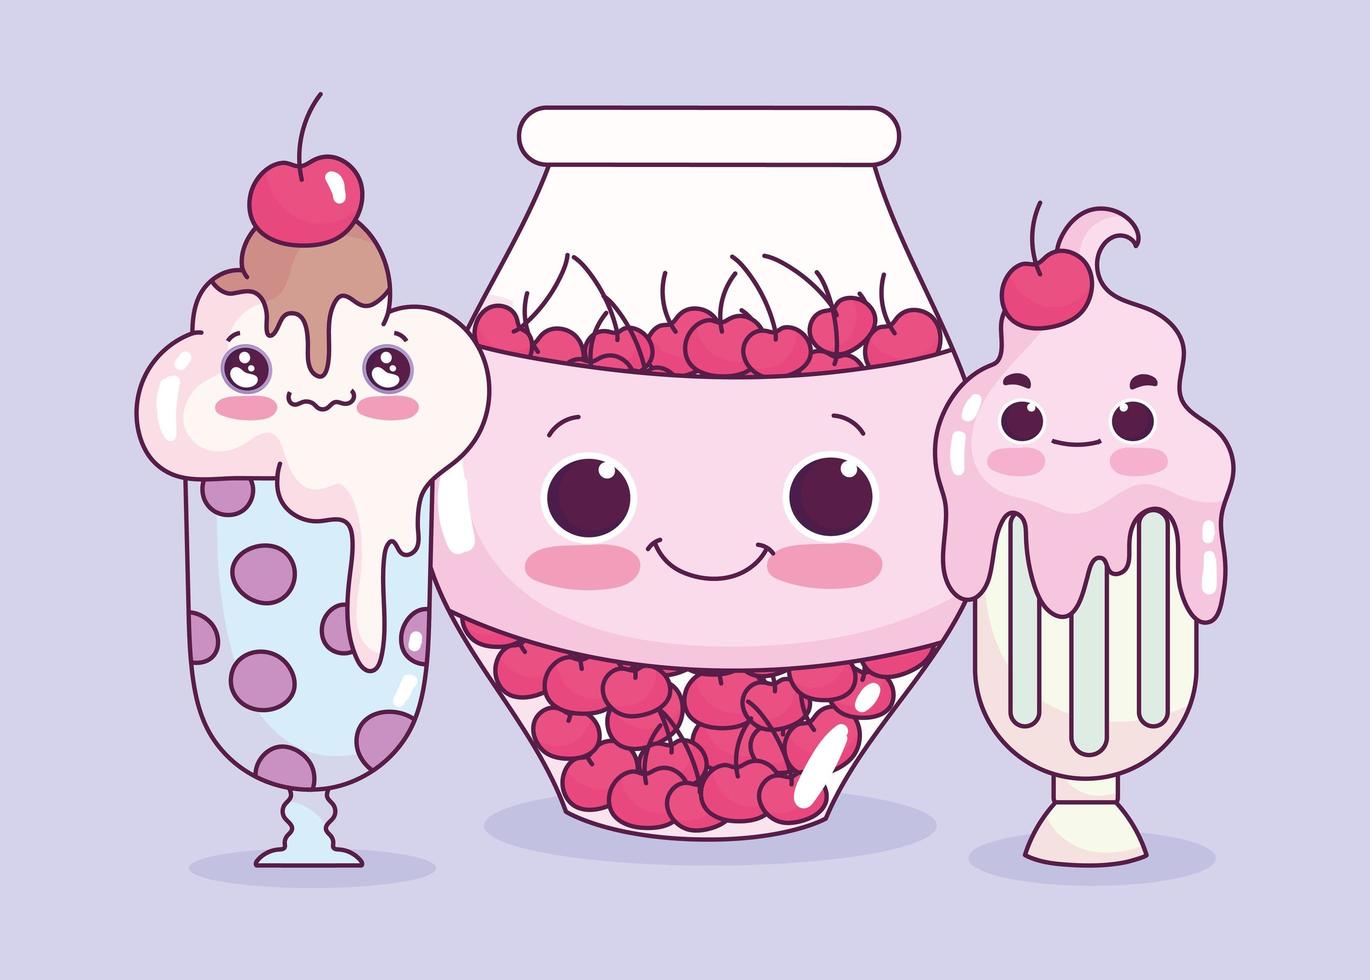 cute food ice cream cups and jar with cherries sweet dessert pastry cartoon vector